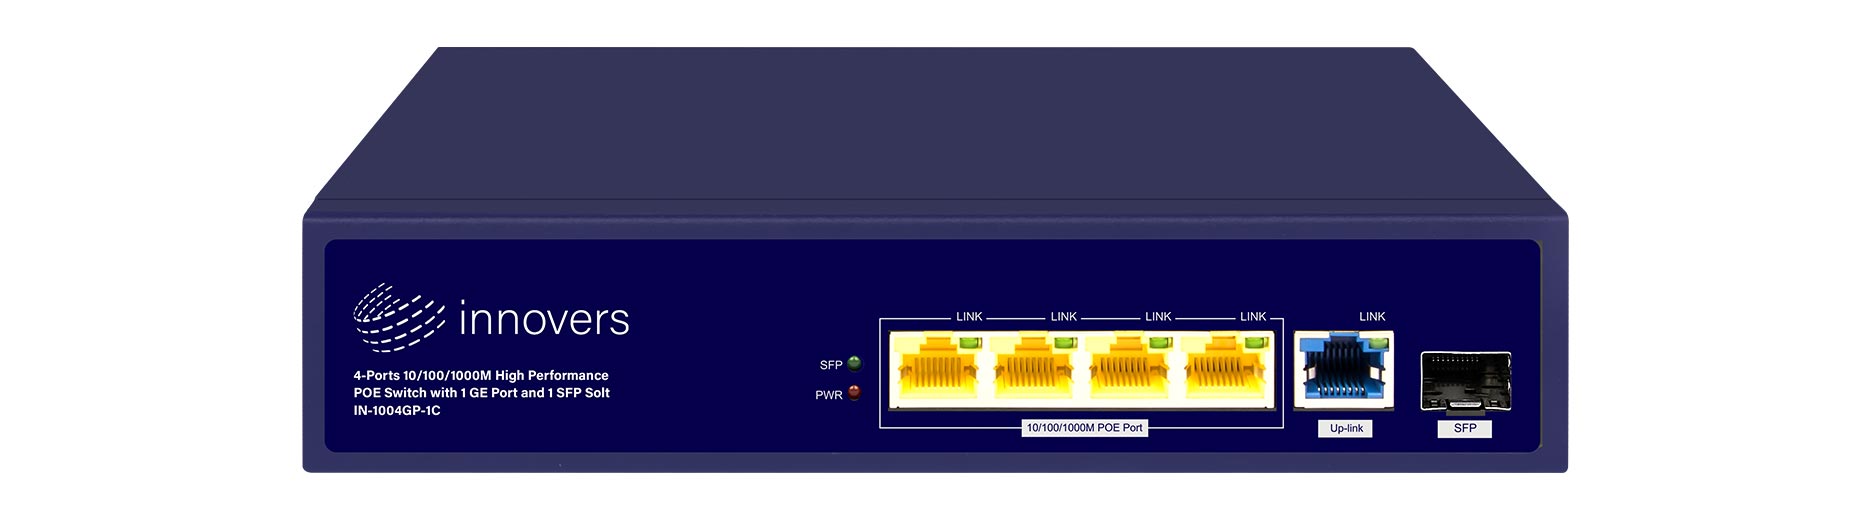 سوئیچ اینوورس مدل IN-1004GP-1C Desktop1